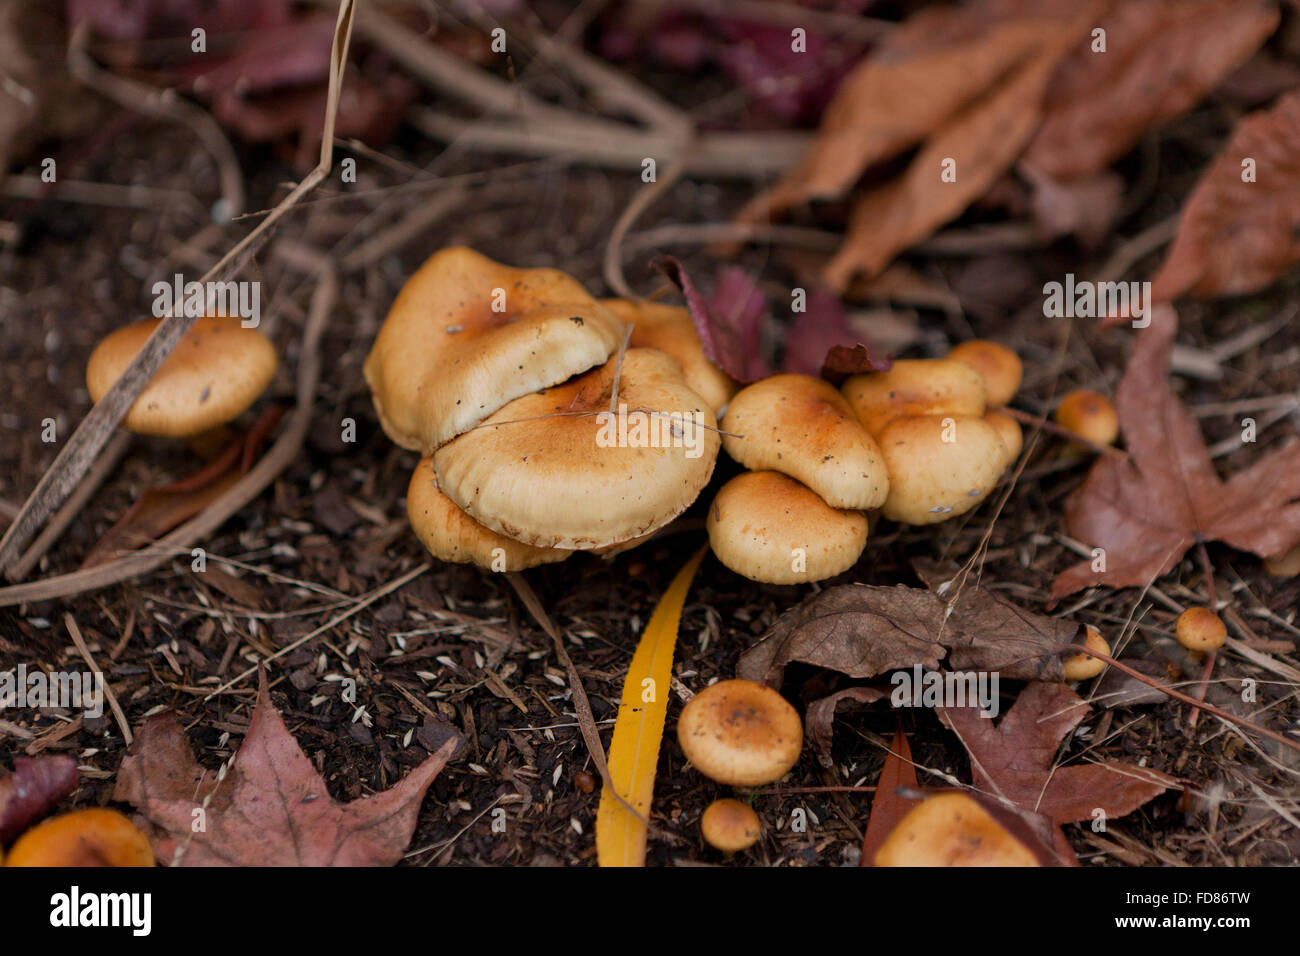 Wild mushrooms growing in garden mulch - USA Stock Photo